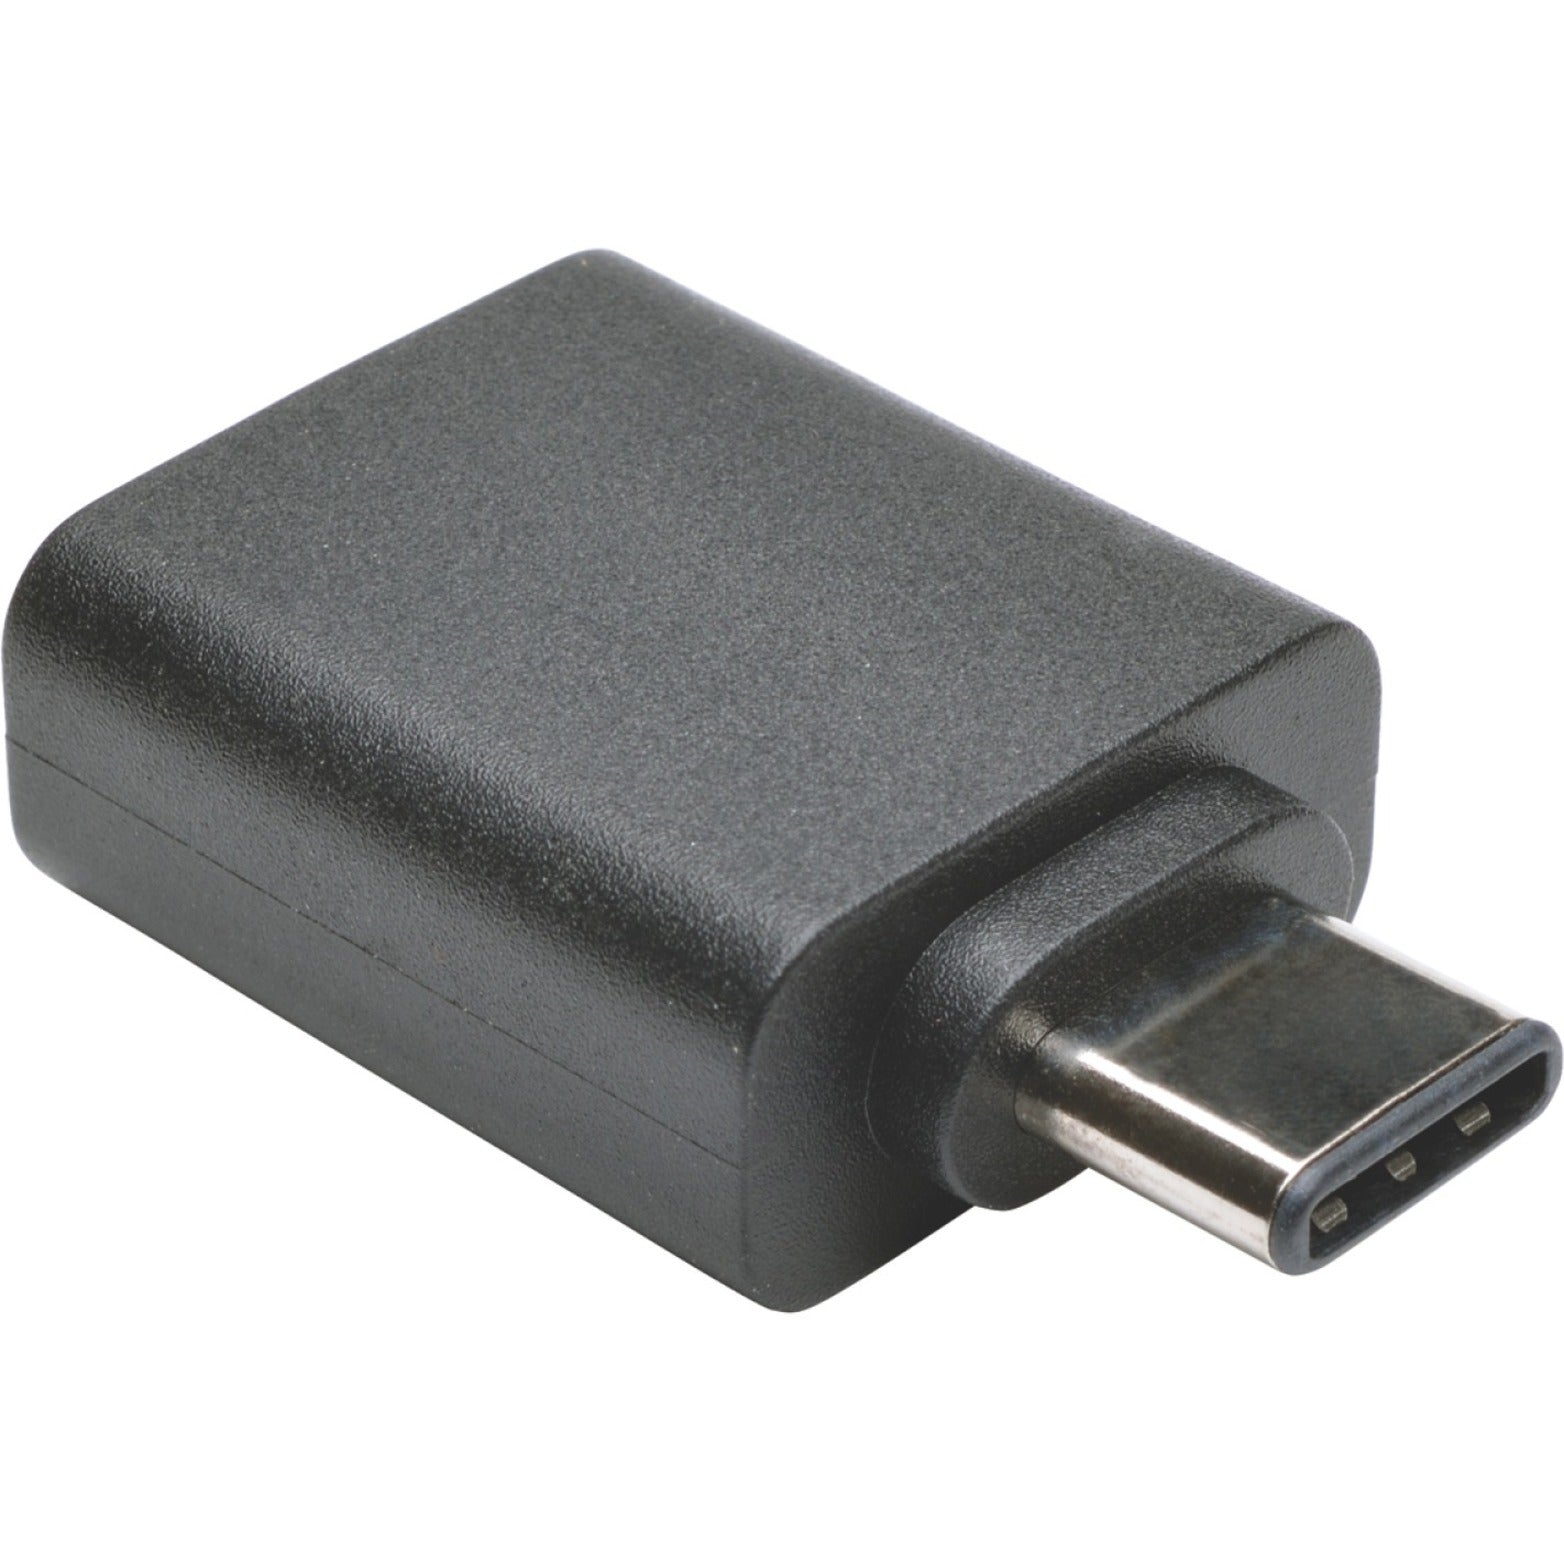 Tripp Lite U428-000-F USB 3.1 Gen 1 Adapter, USB Type-C to USB Type-A, 5 Gbps Data Transfer